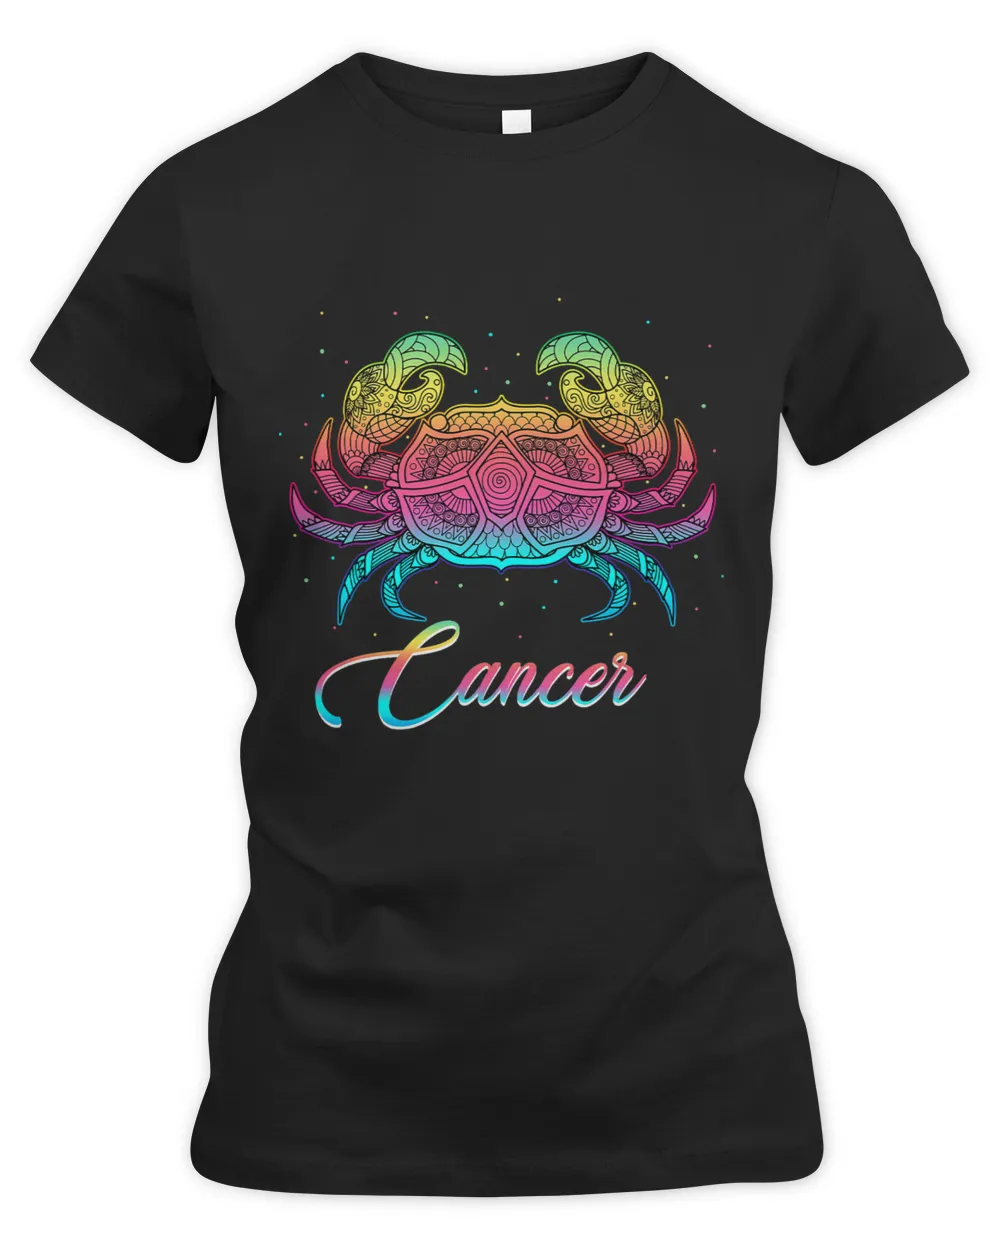 Cancer Zodiac sign the crab symbol